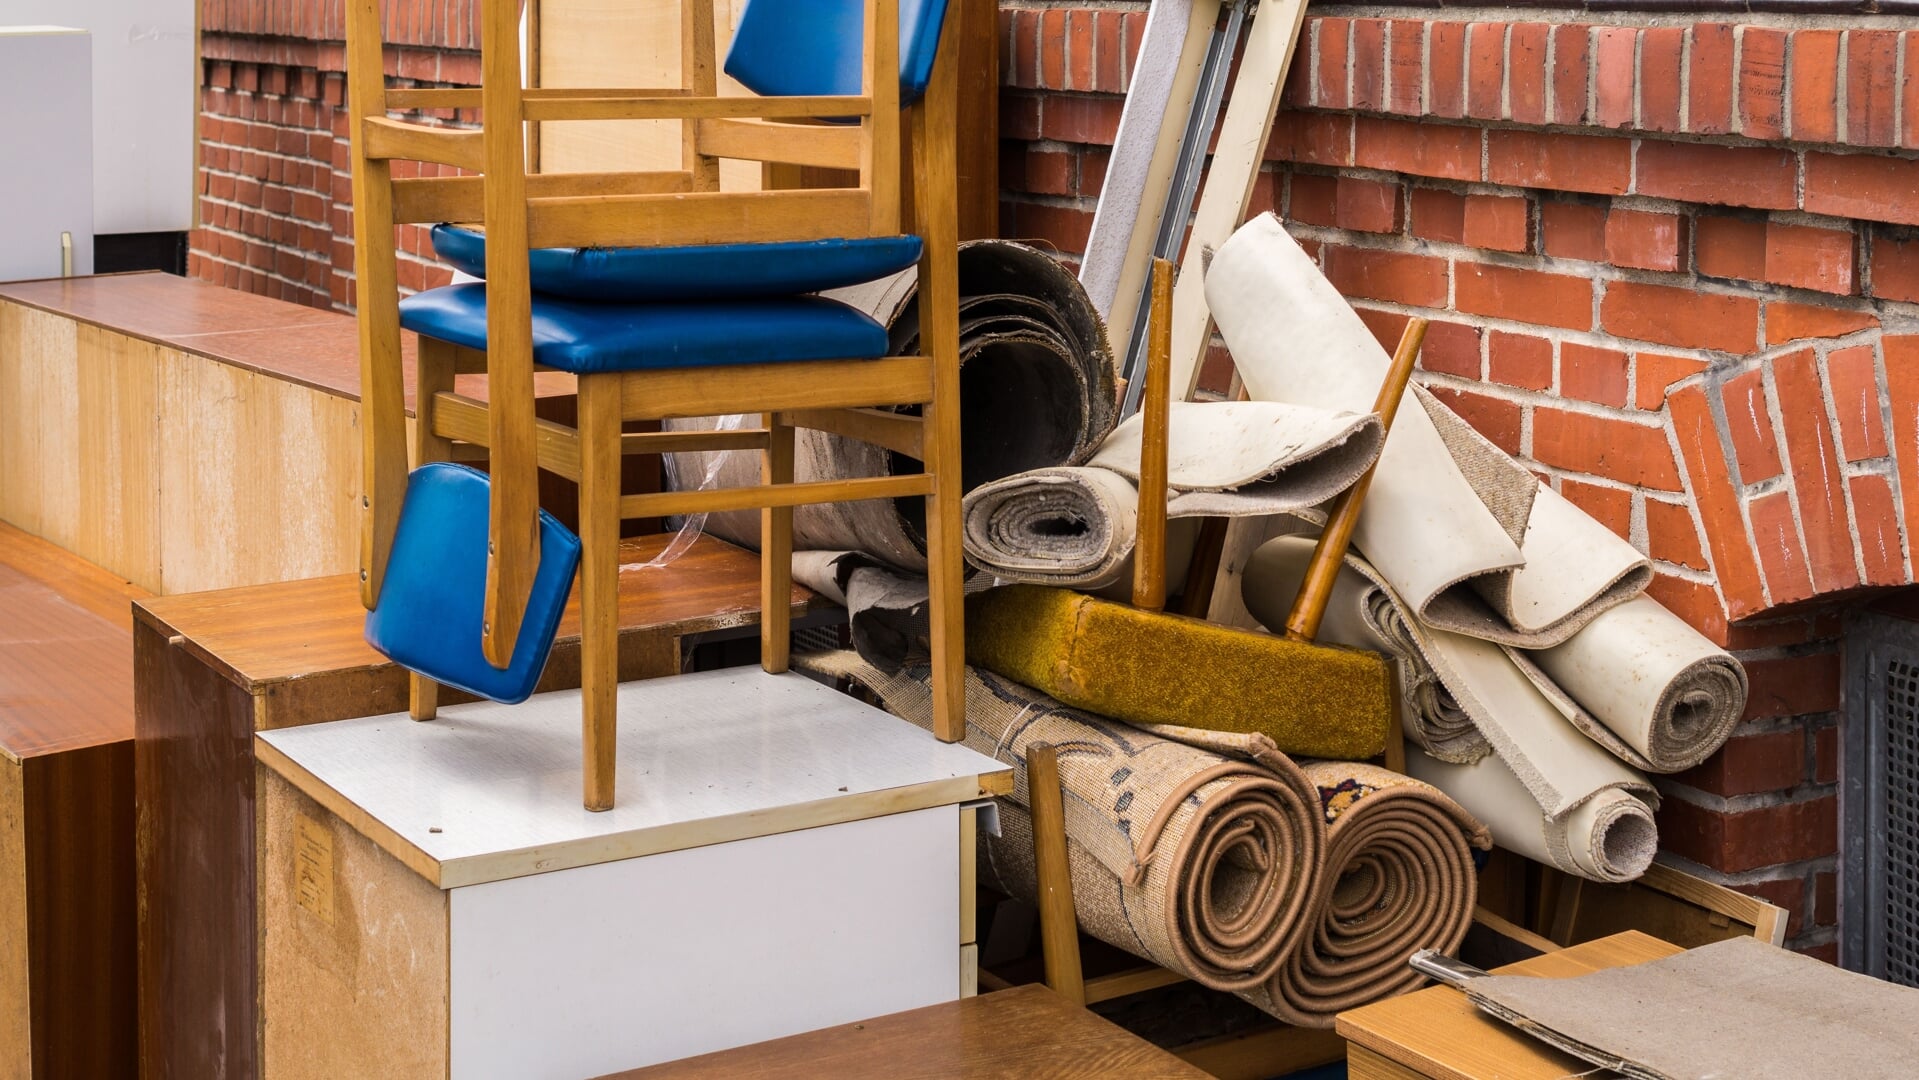 Hoes Ingang accumuleren Kringloopwinkel in Goudriaan stopt met innemen van grote meubels | Al het  nieuws uit Alblasserwaard